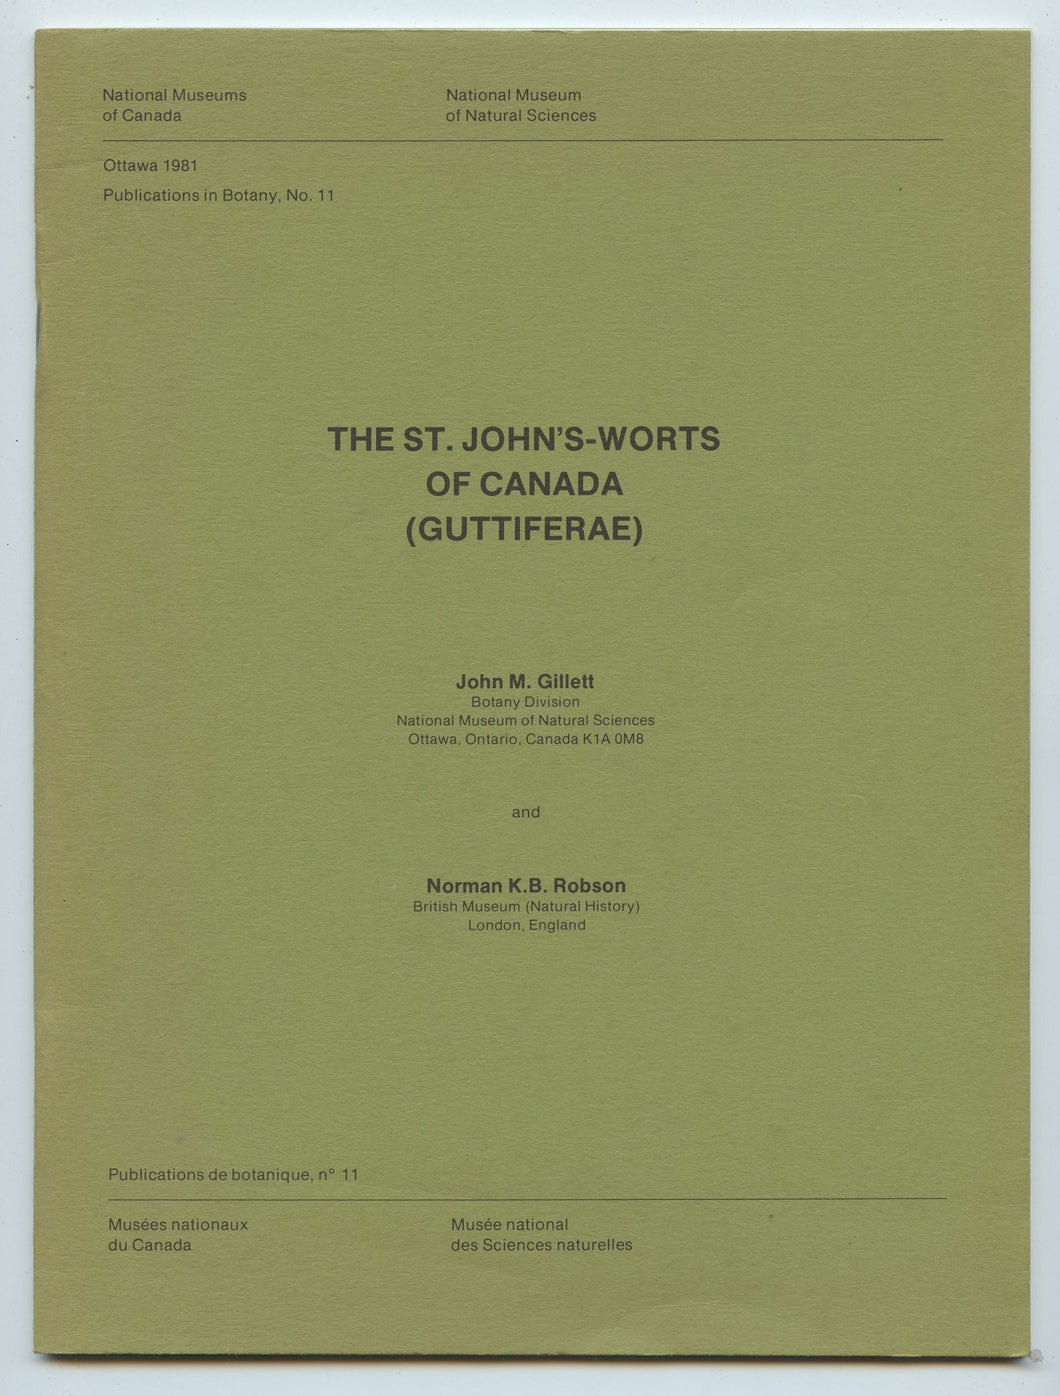 The St. John's-Worts of Canada (Guttiferae)